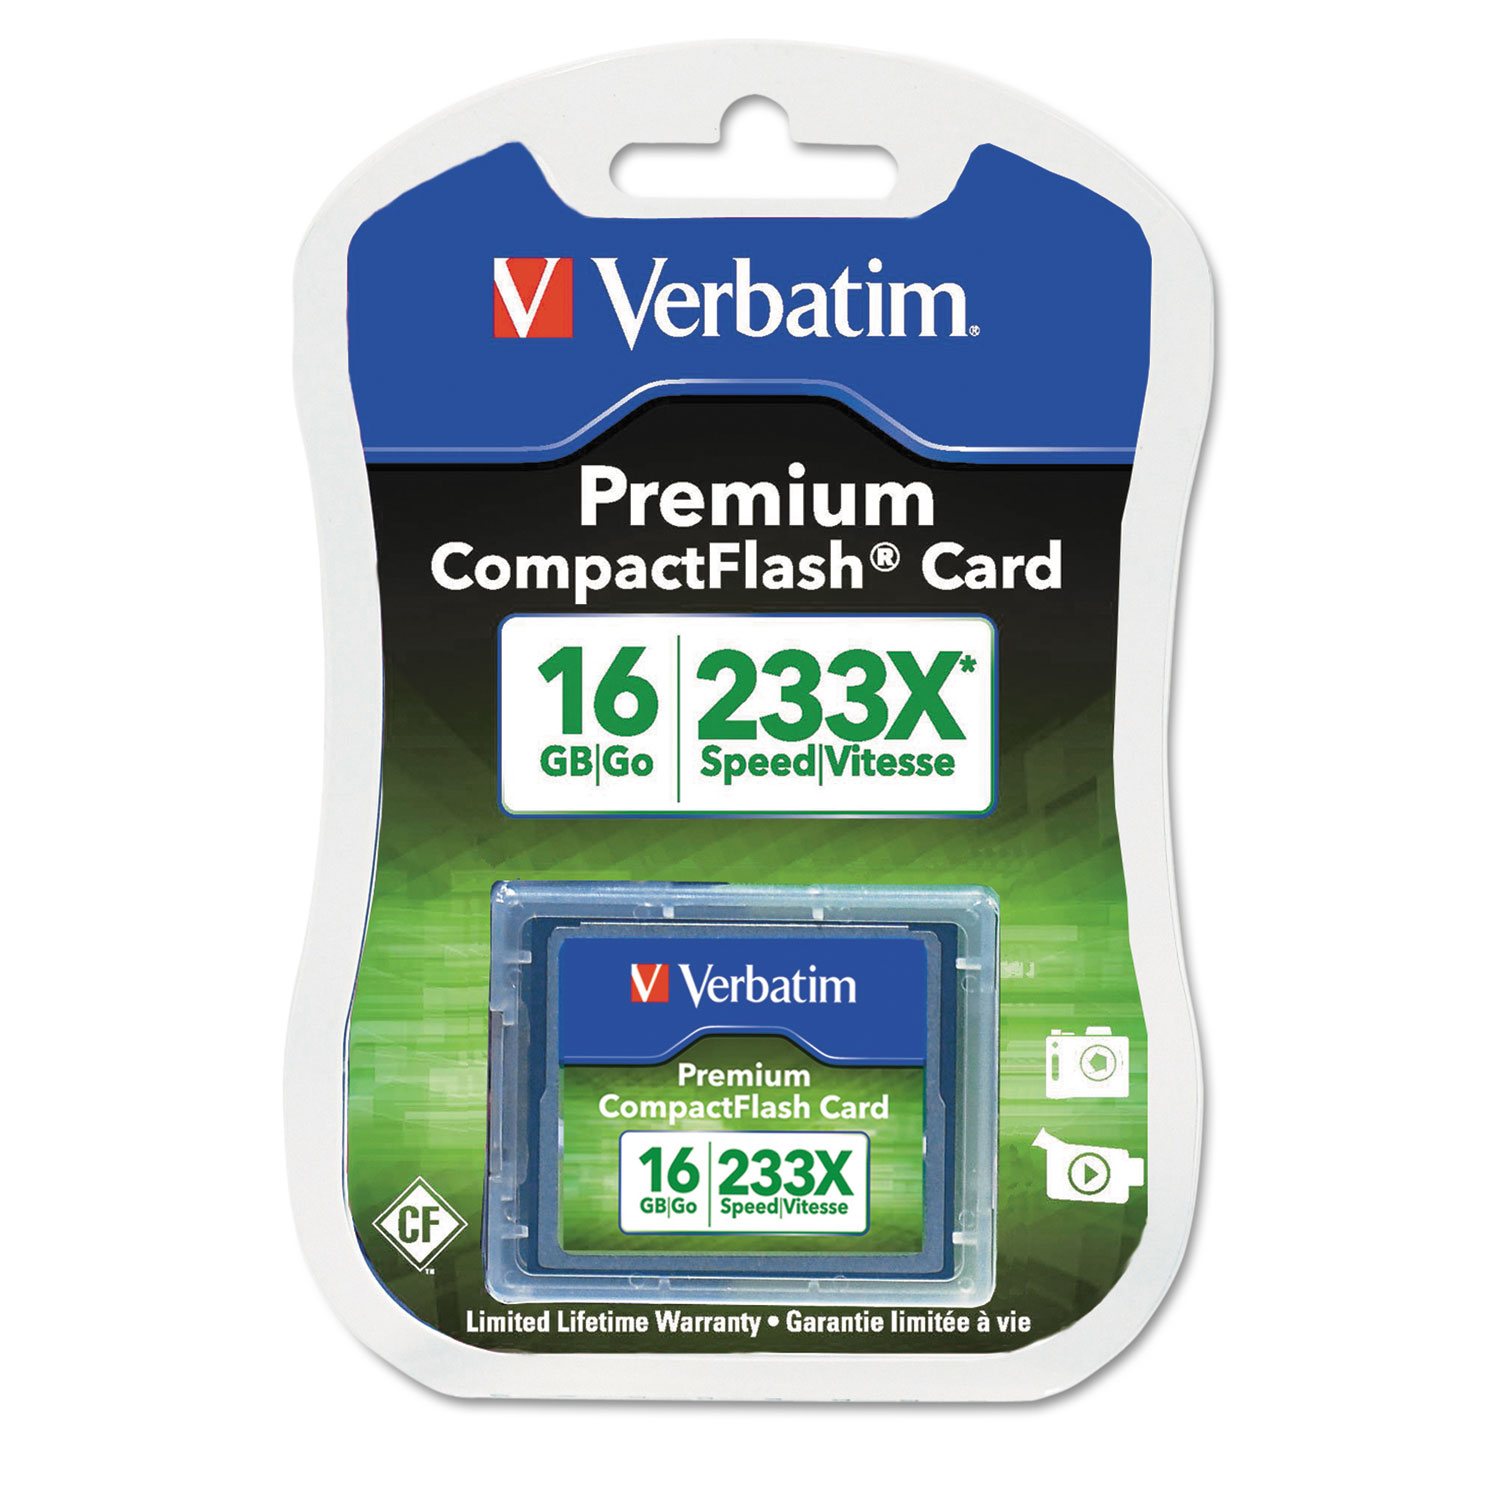 Premium CompactFlash Memory Card, 16GB, 233X Maximum Transfer Rate